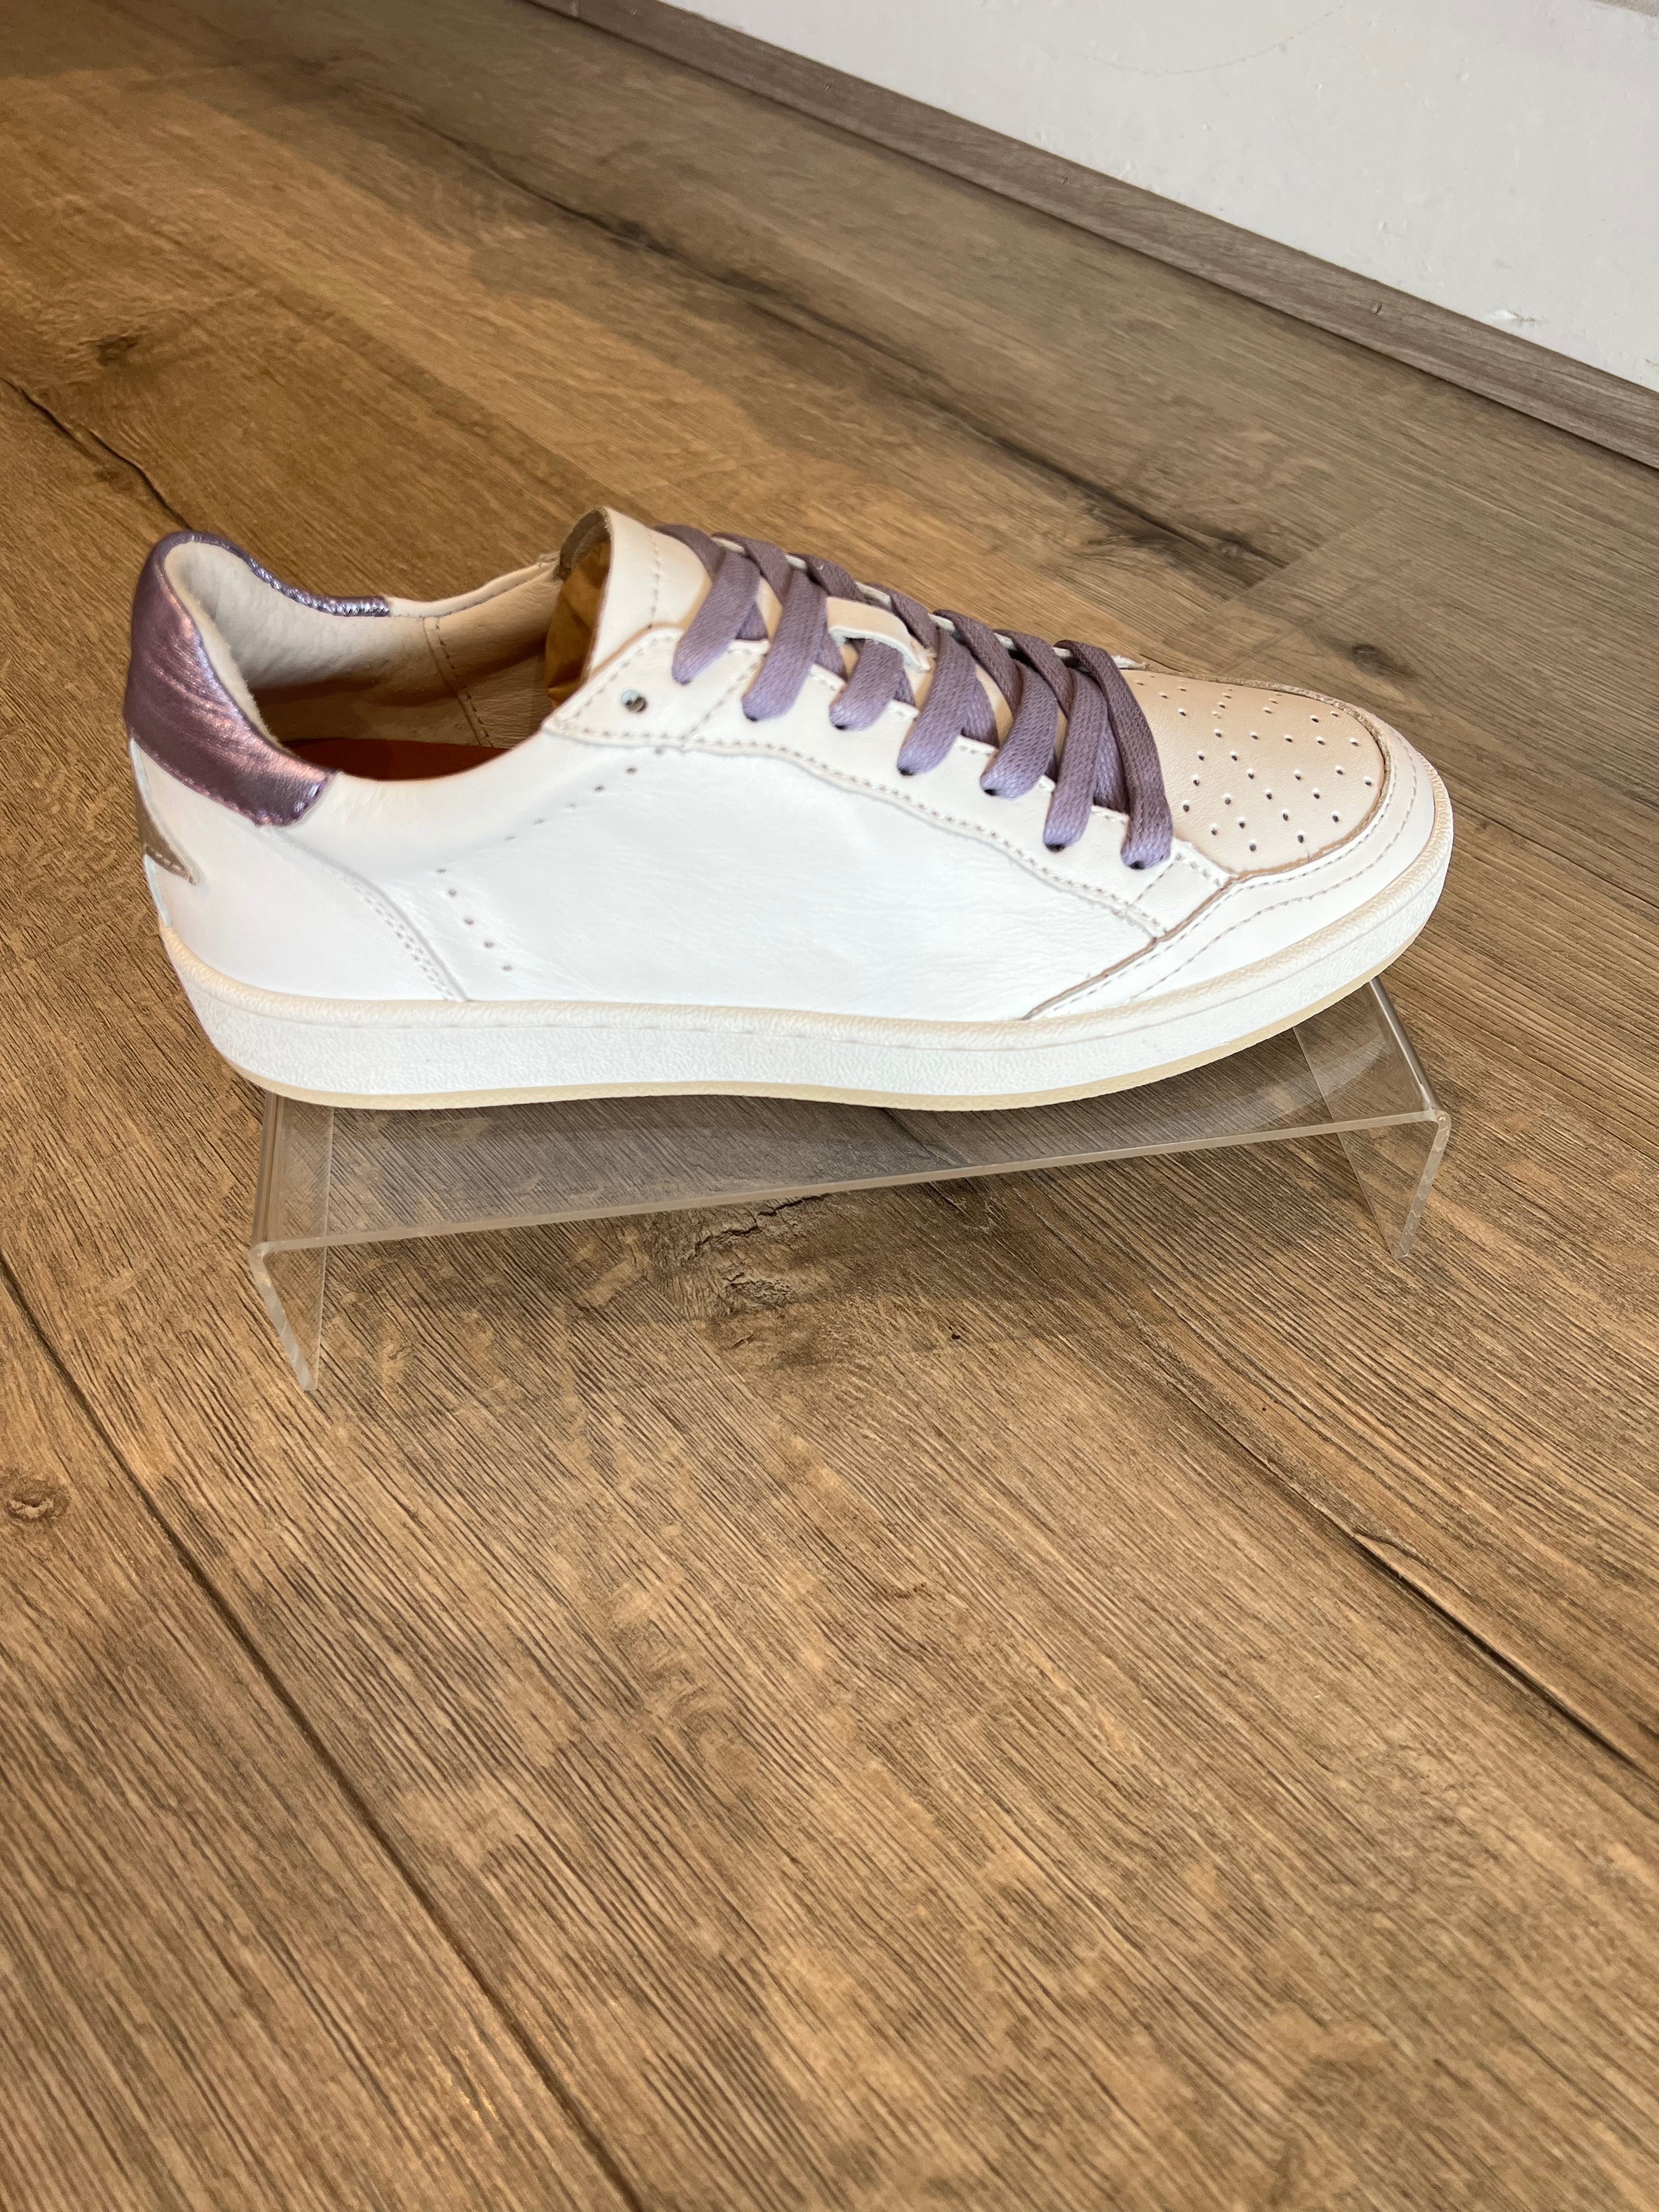 Alfie & Evie - Ajax - White/Purple Leather Sneaker